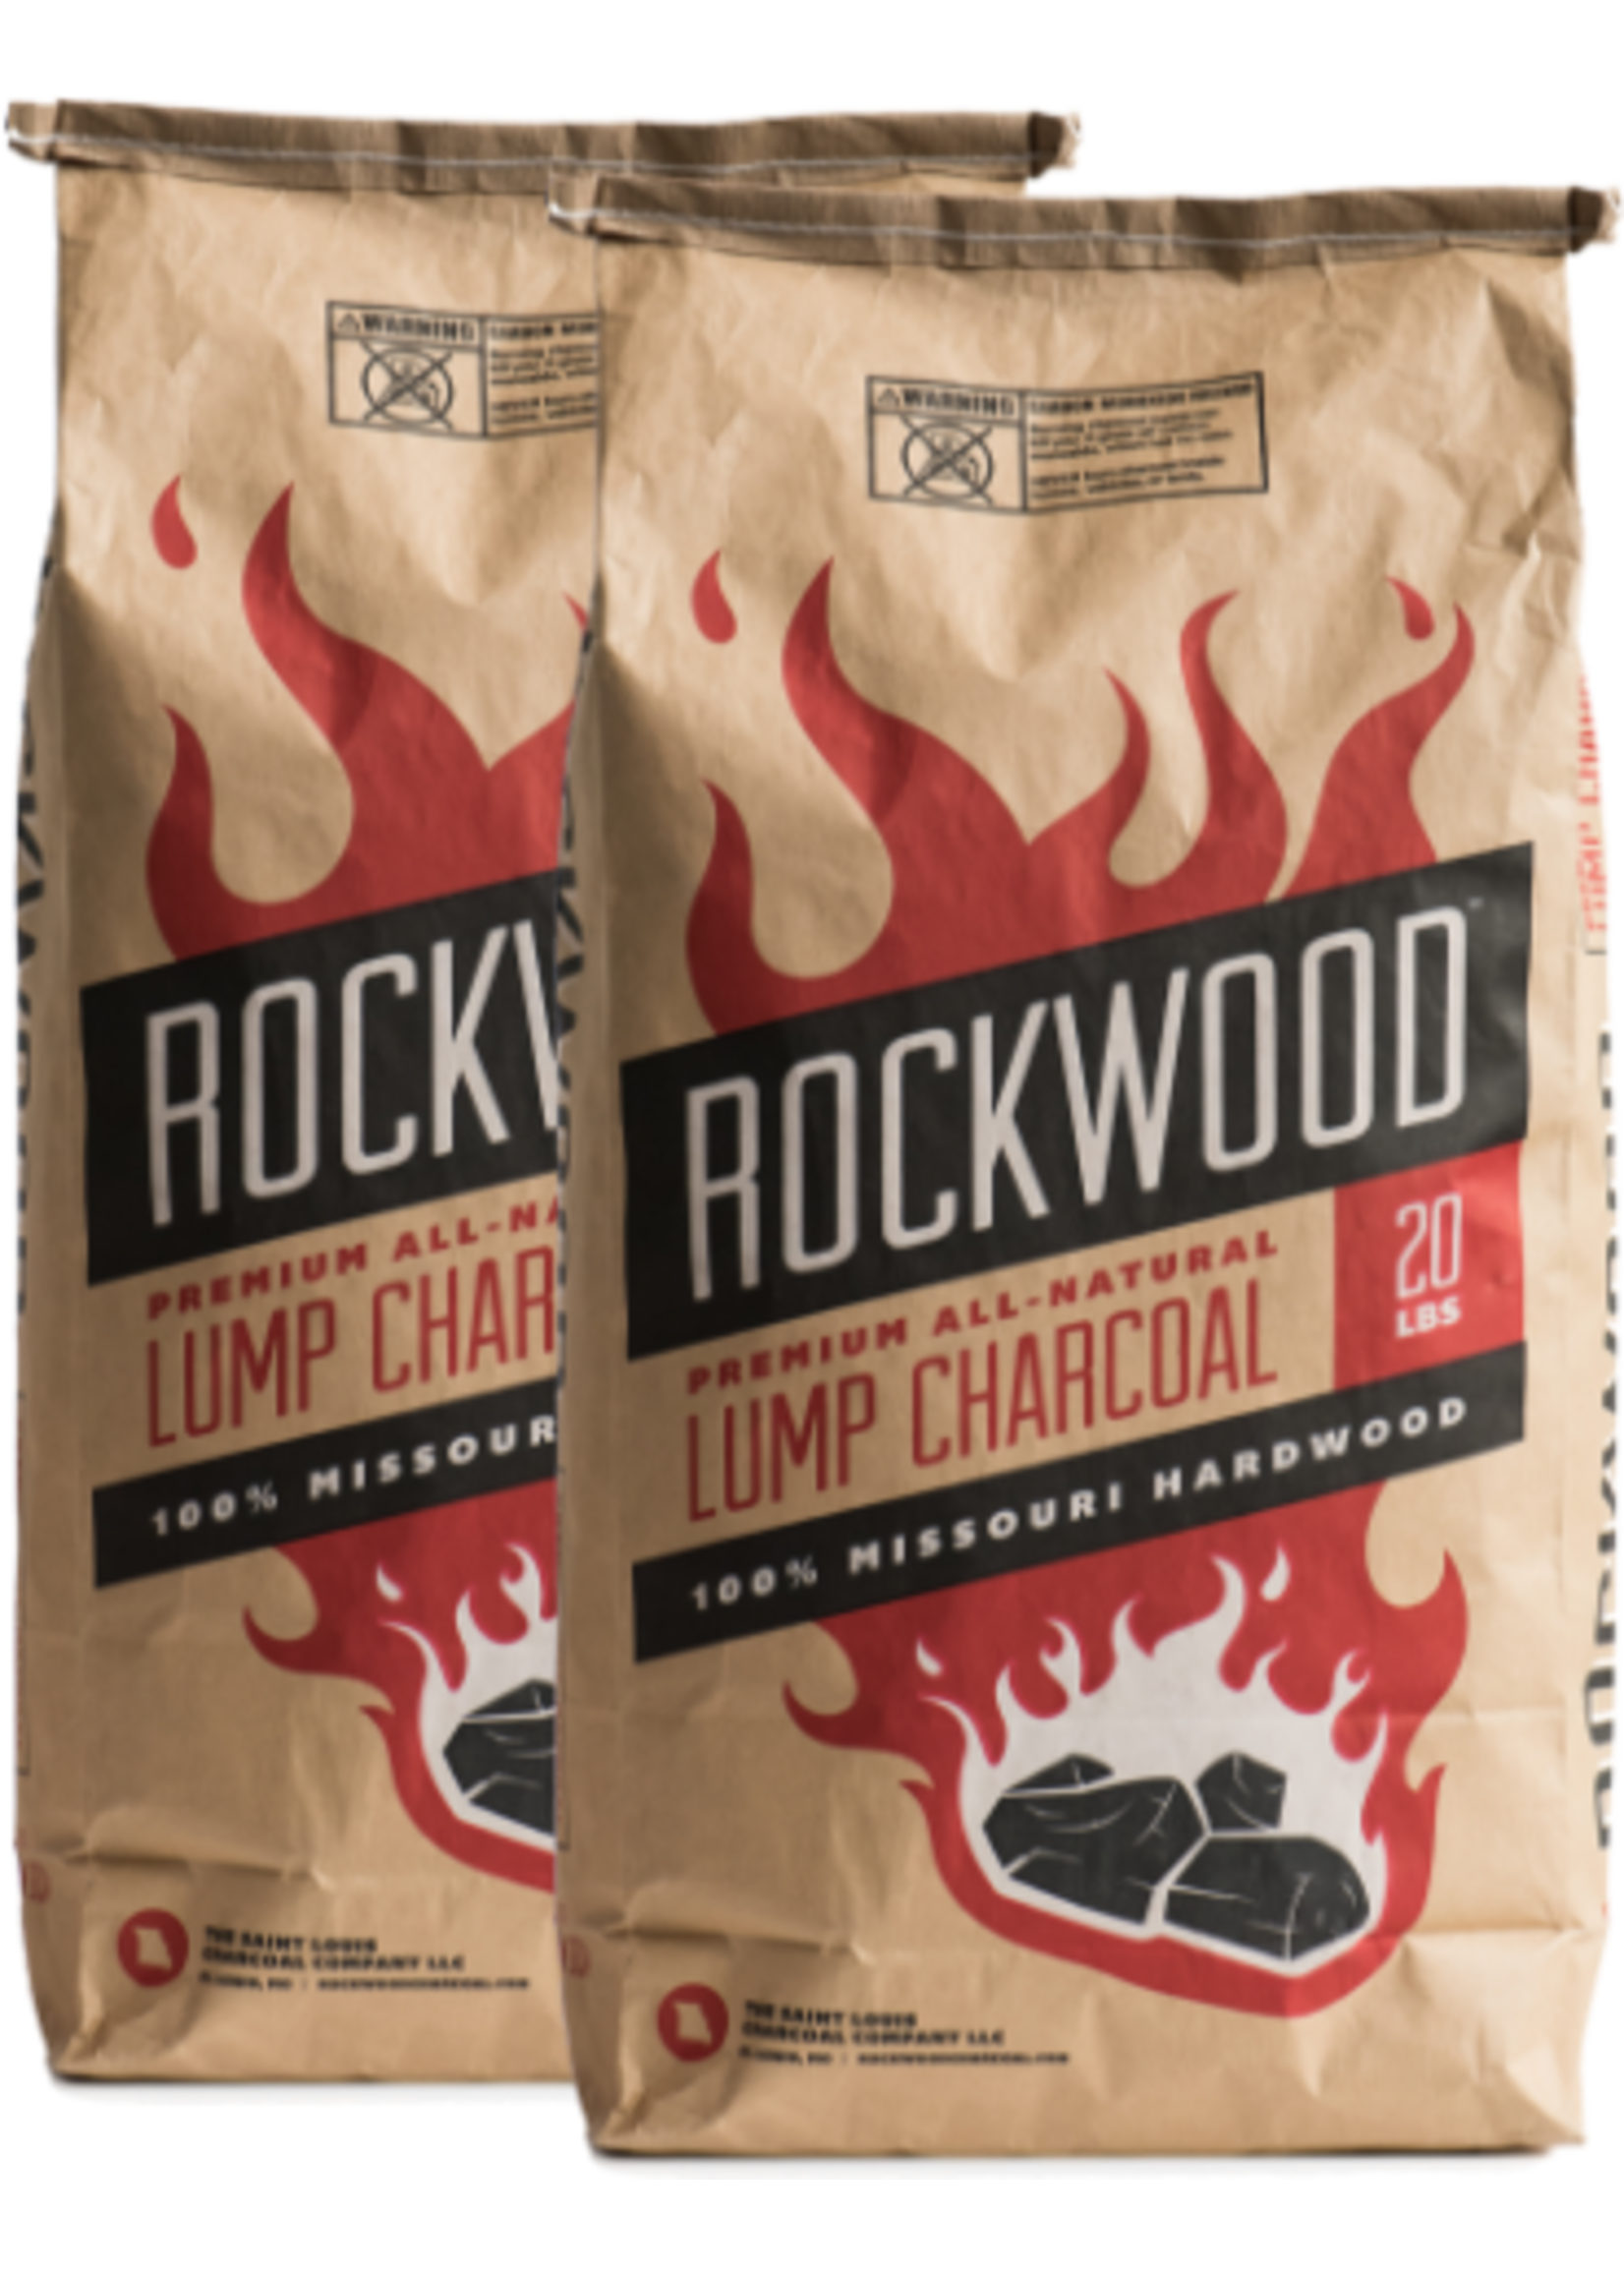 St. Louis Charcoal Rockwood Charcoal - 20 lbs Bag